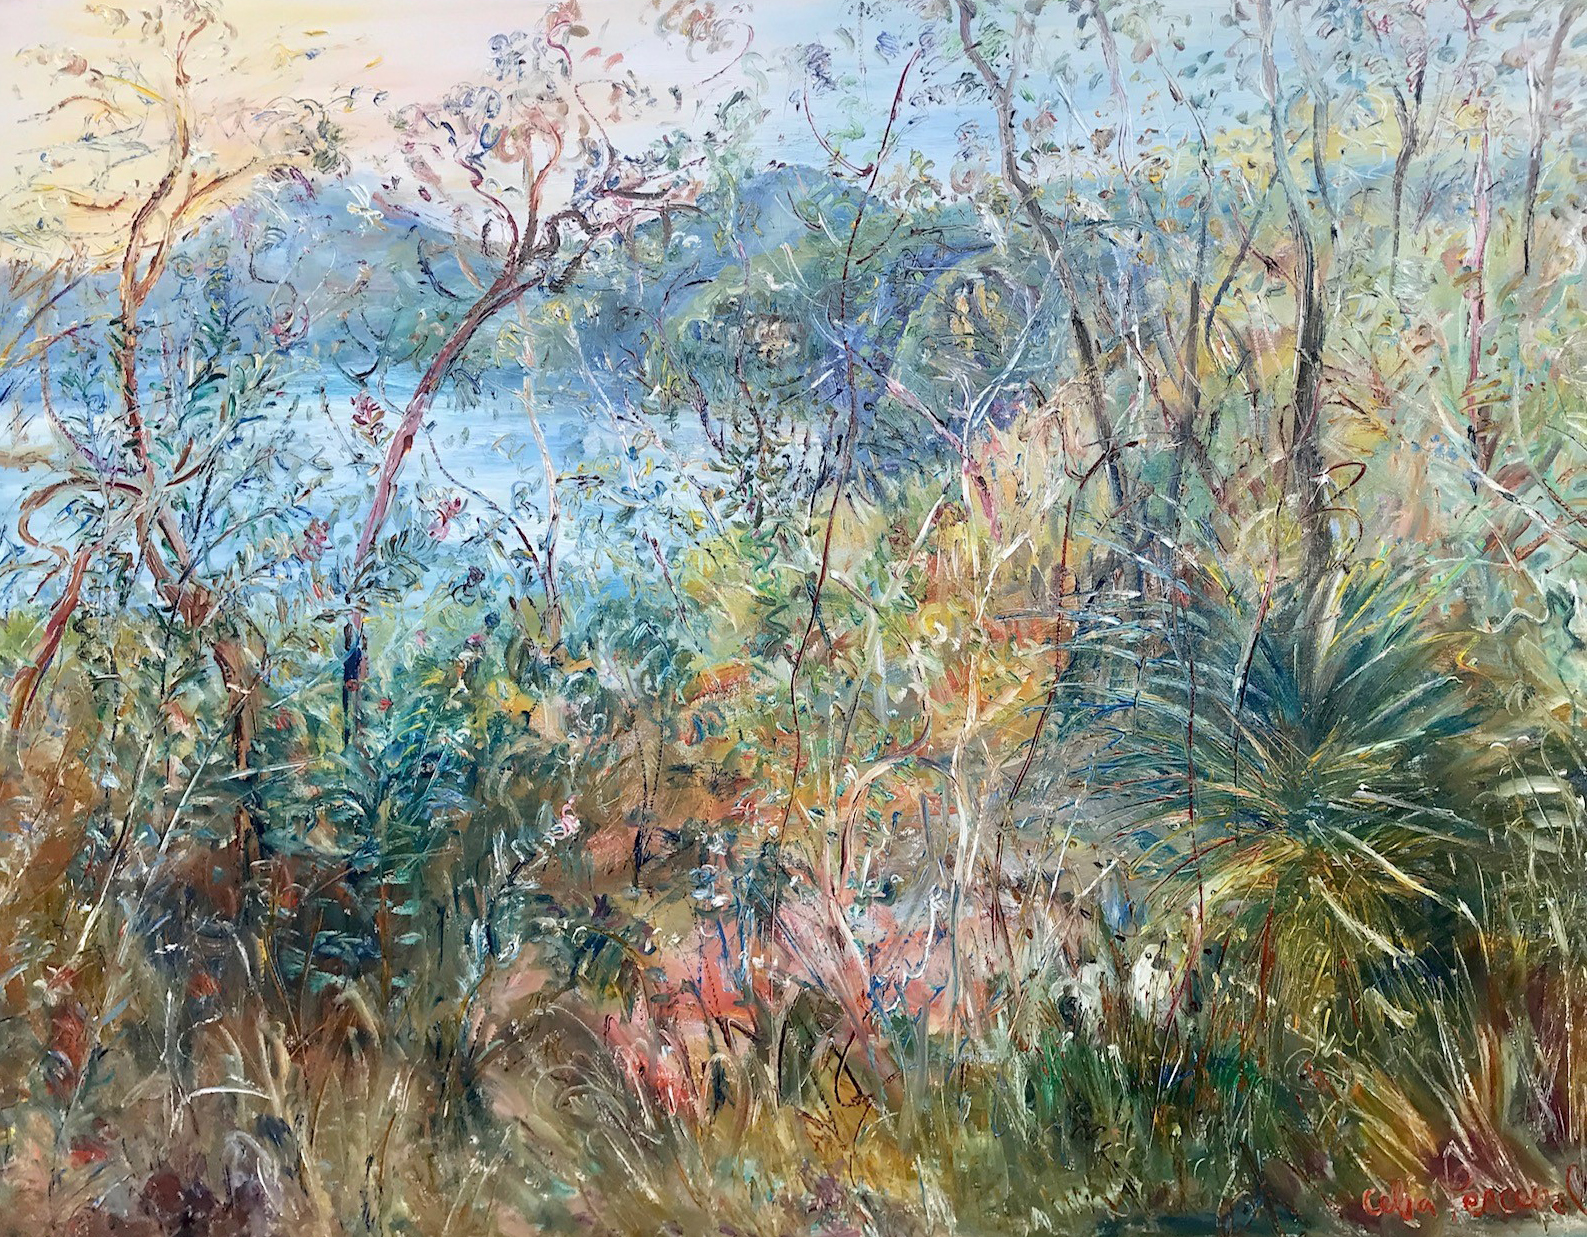 Celia Perceval 'White Cockies on the Mooney Mooney Creek' oil on canvas 153 x 198cm $44,500 SOLD